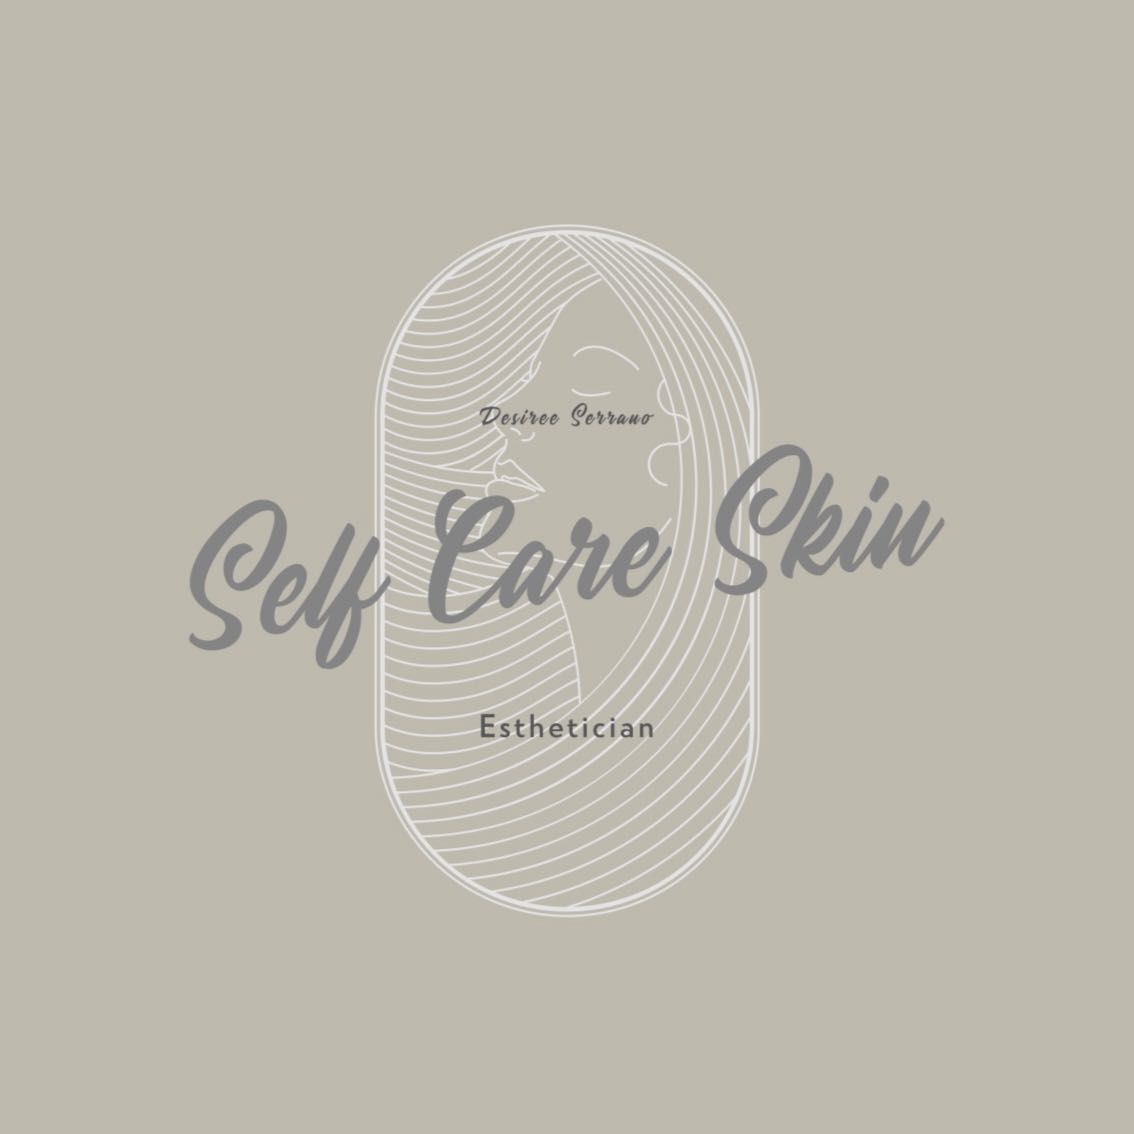 Self Care Skin, NA, Ontario, 91761